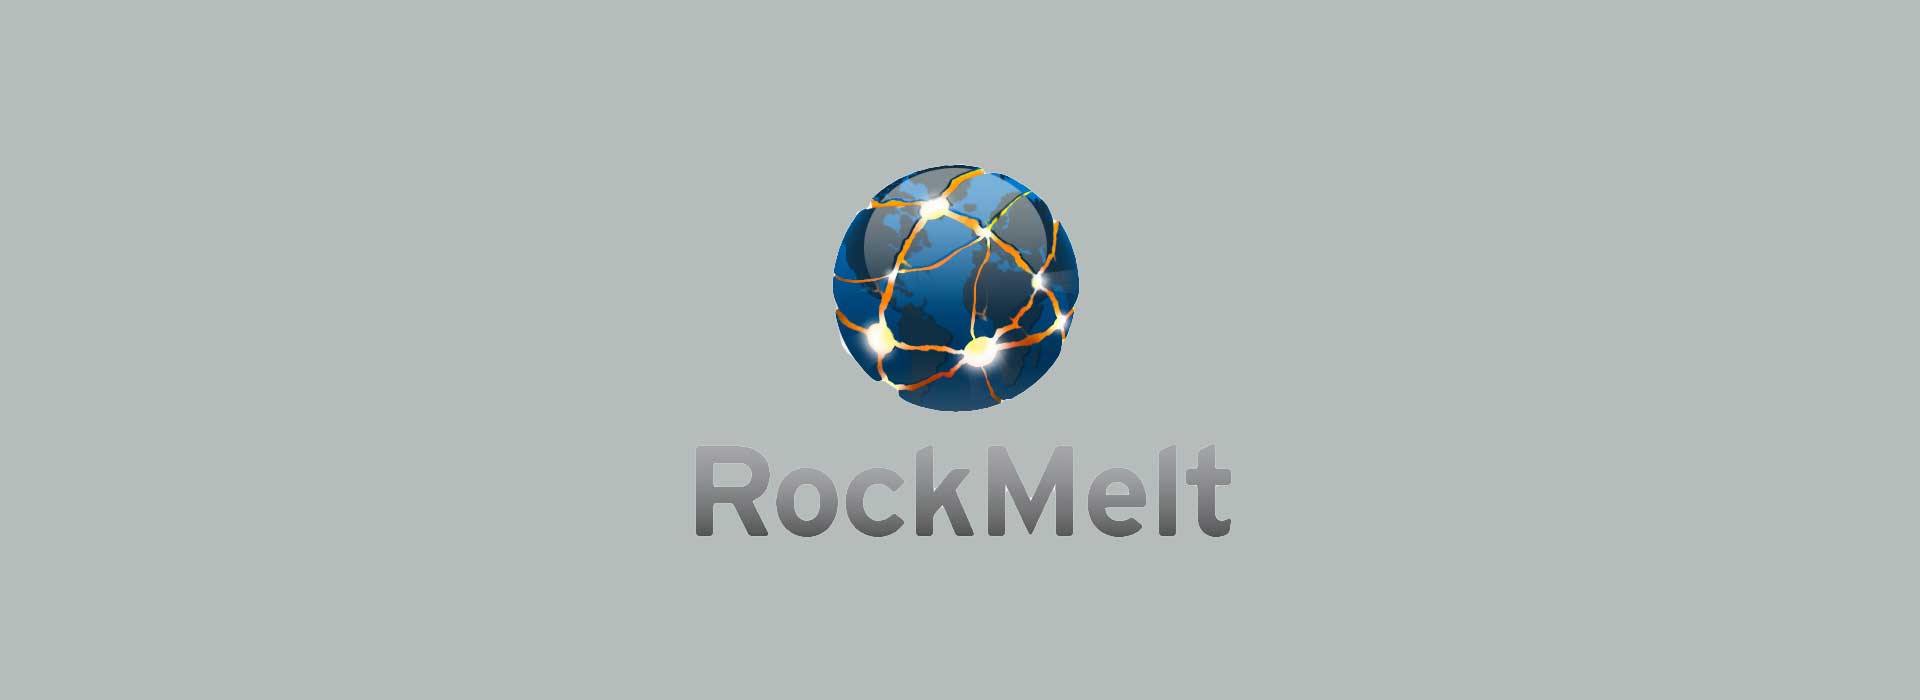 RockMelt Logo - The RockMelt Browser: A Study In Consolidation | Starmark ...